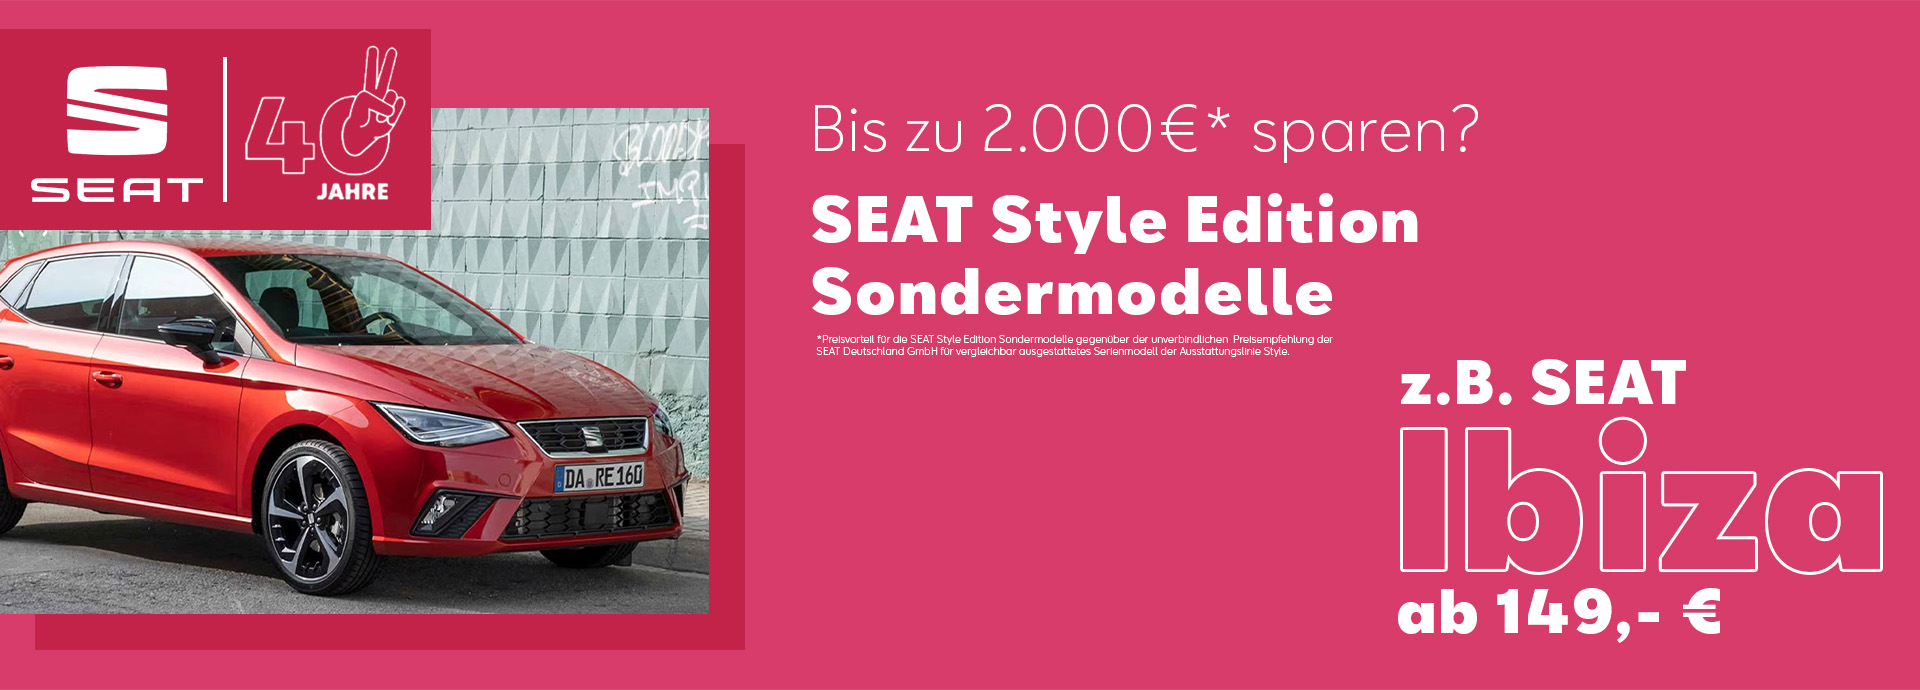 Seat Style Edition Sondermodelle